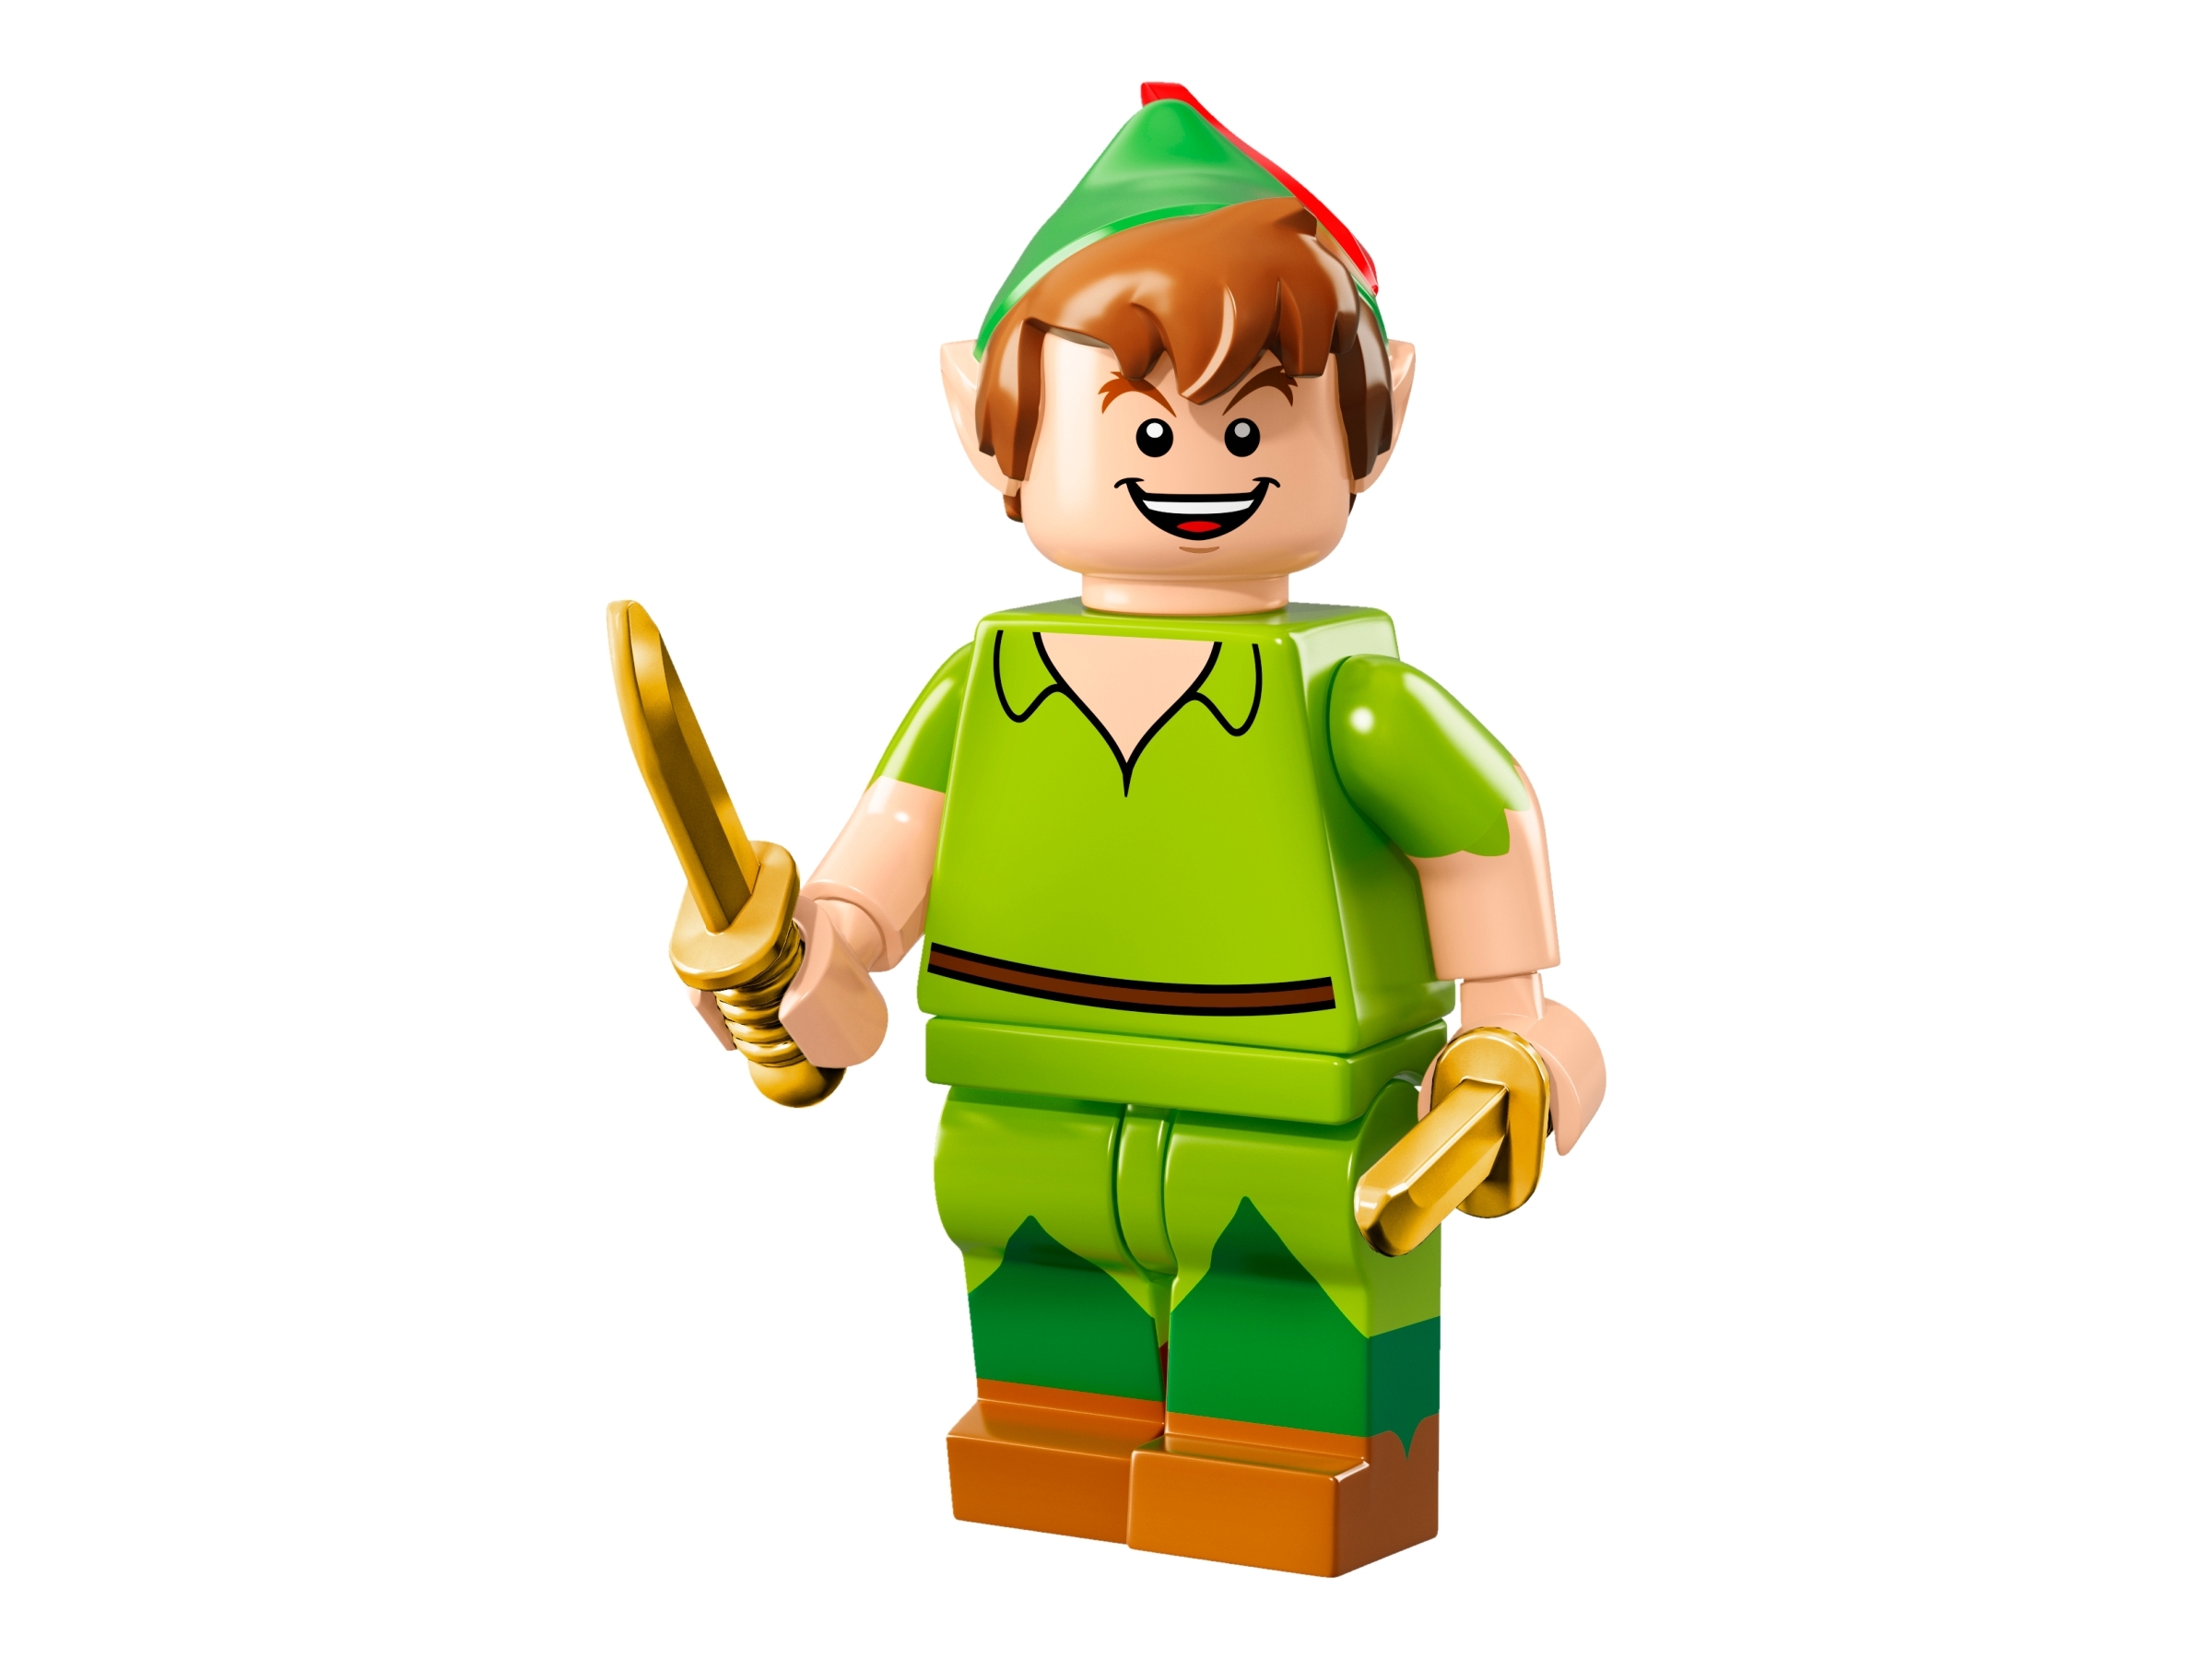 Lego Disney Series 16 Collectible Minifigure - Stitch (71012)